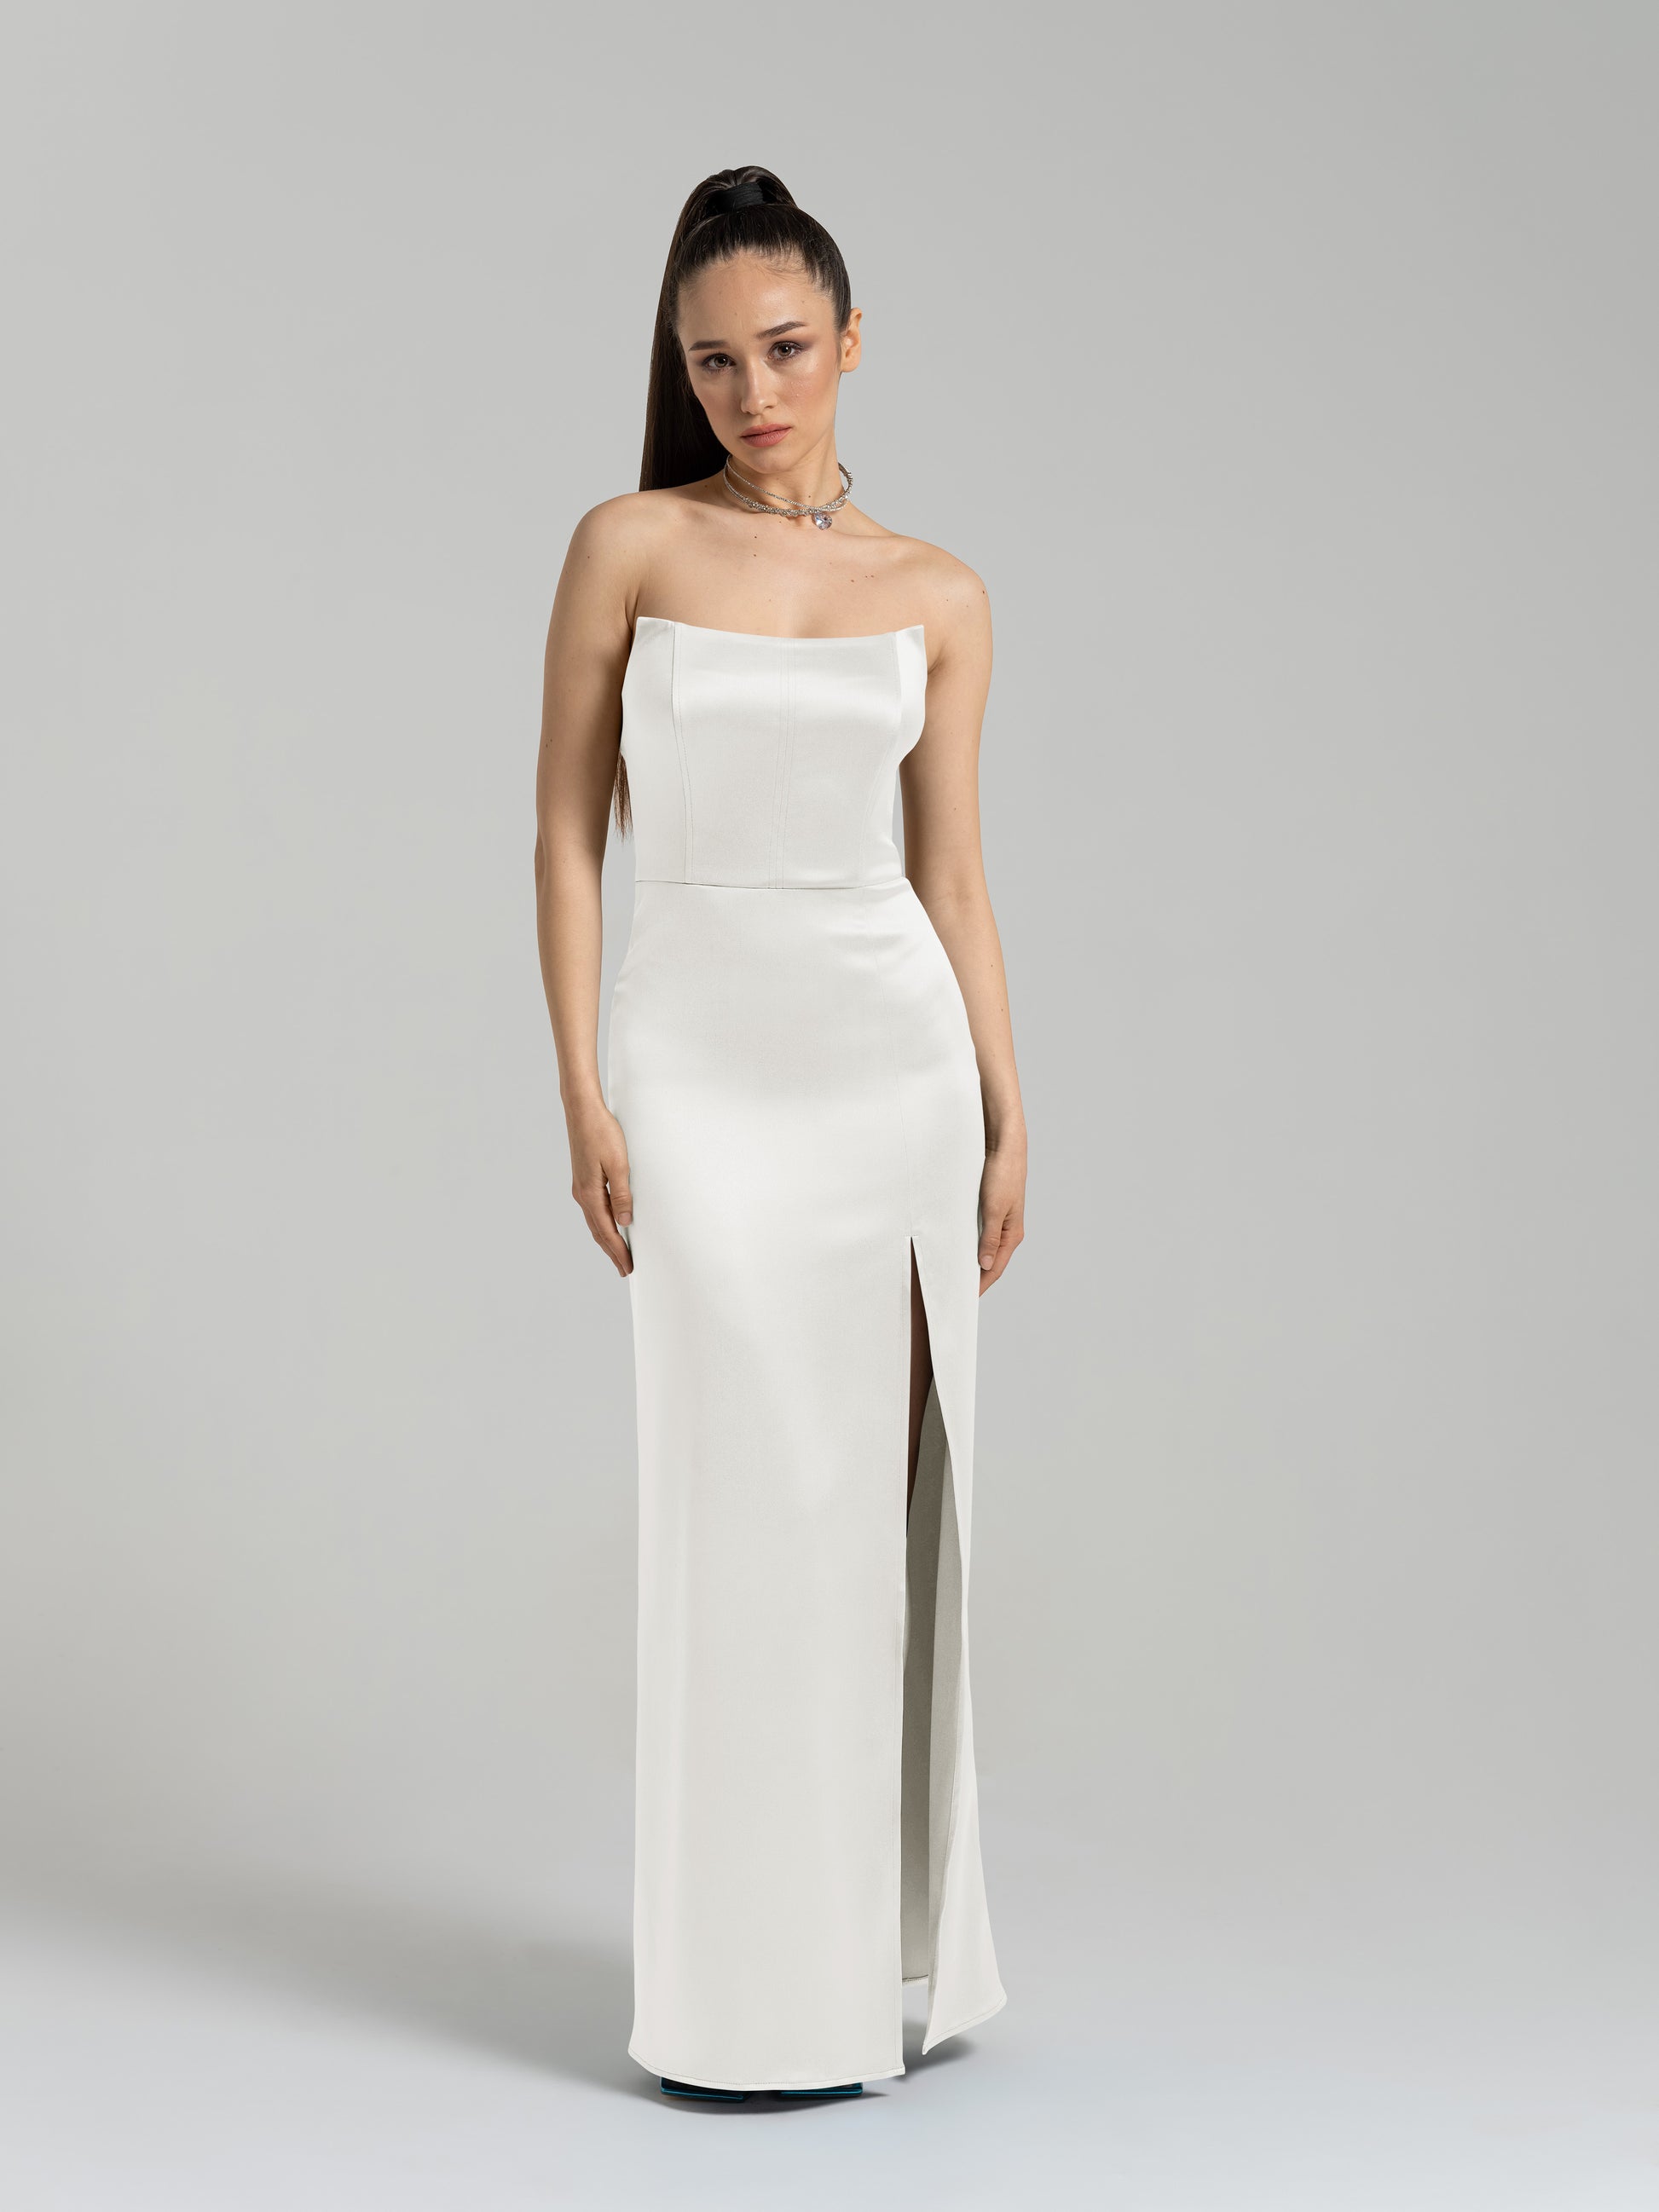 Queen of Hearts Satin Maxi Dress - Pearl White by Tia Dorraine Women's Luxury Fashion Designer Clothing Brand